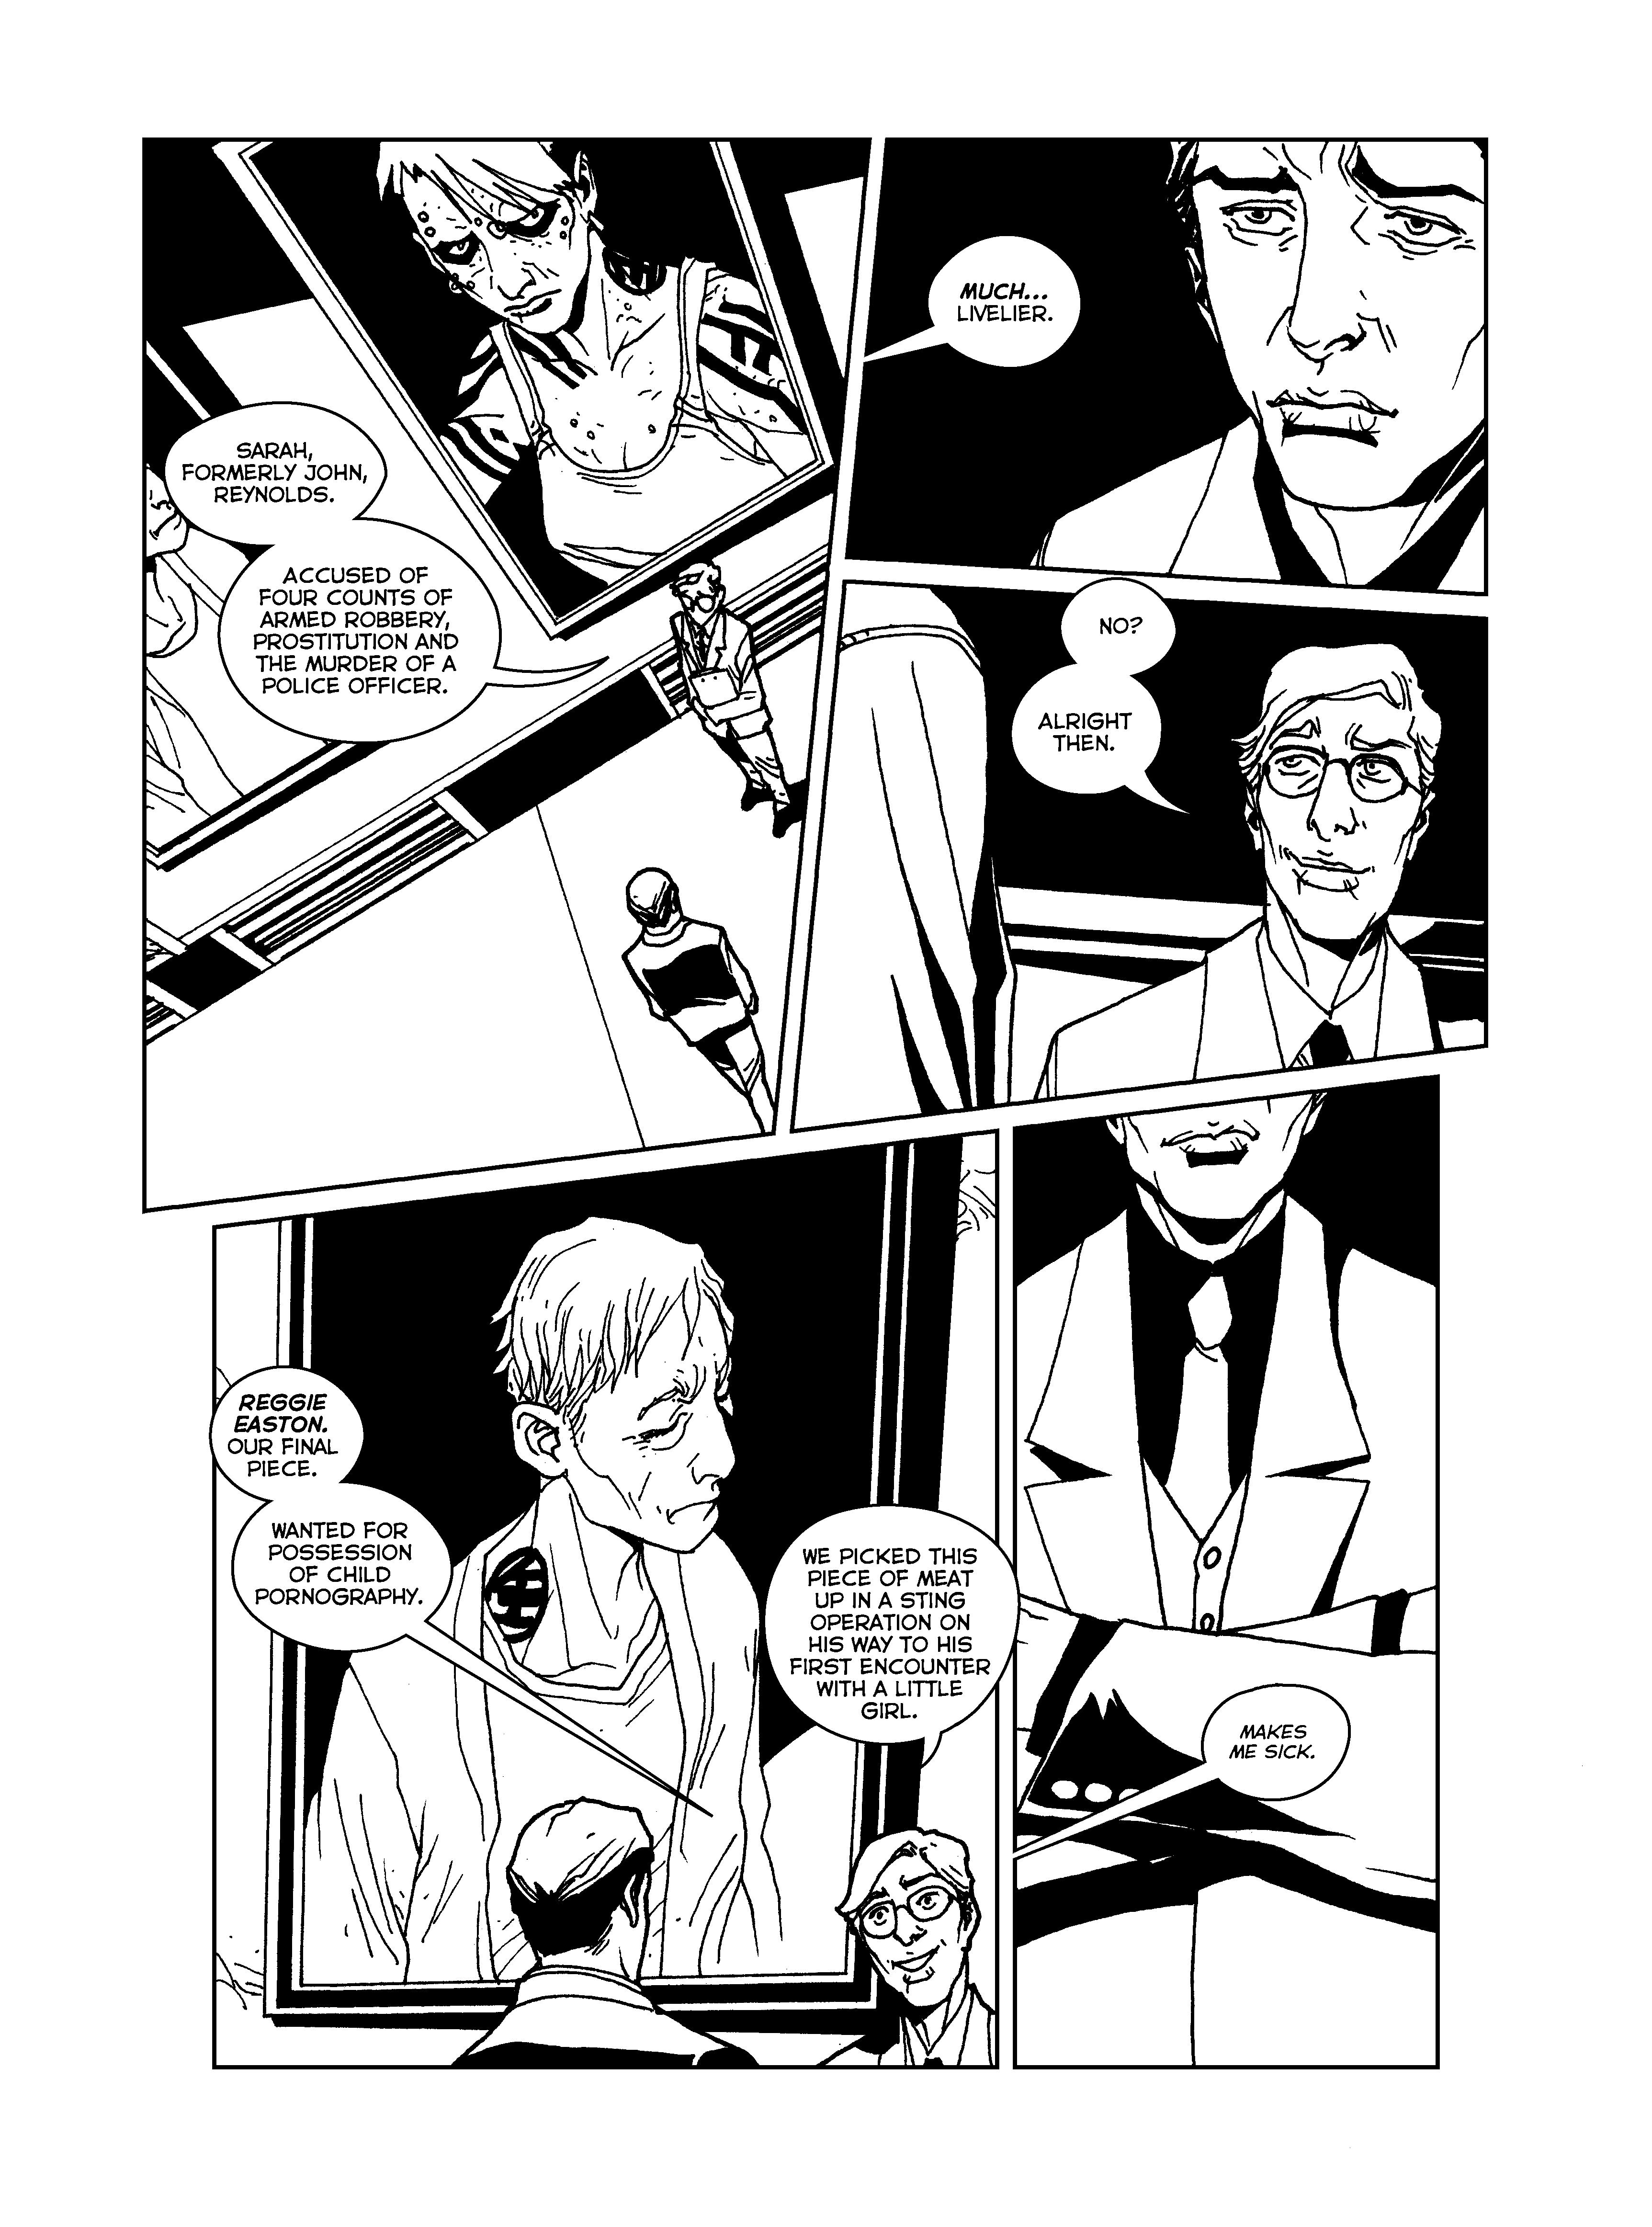 Rebirth, page 3